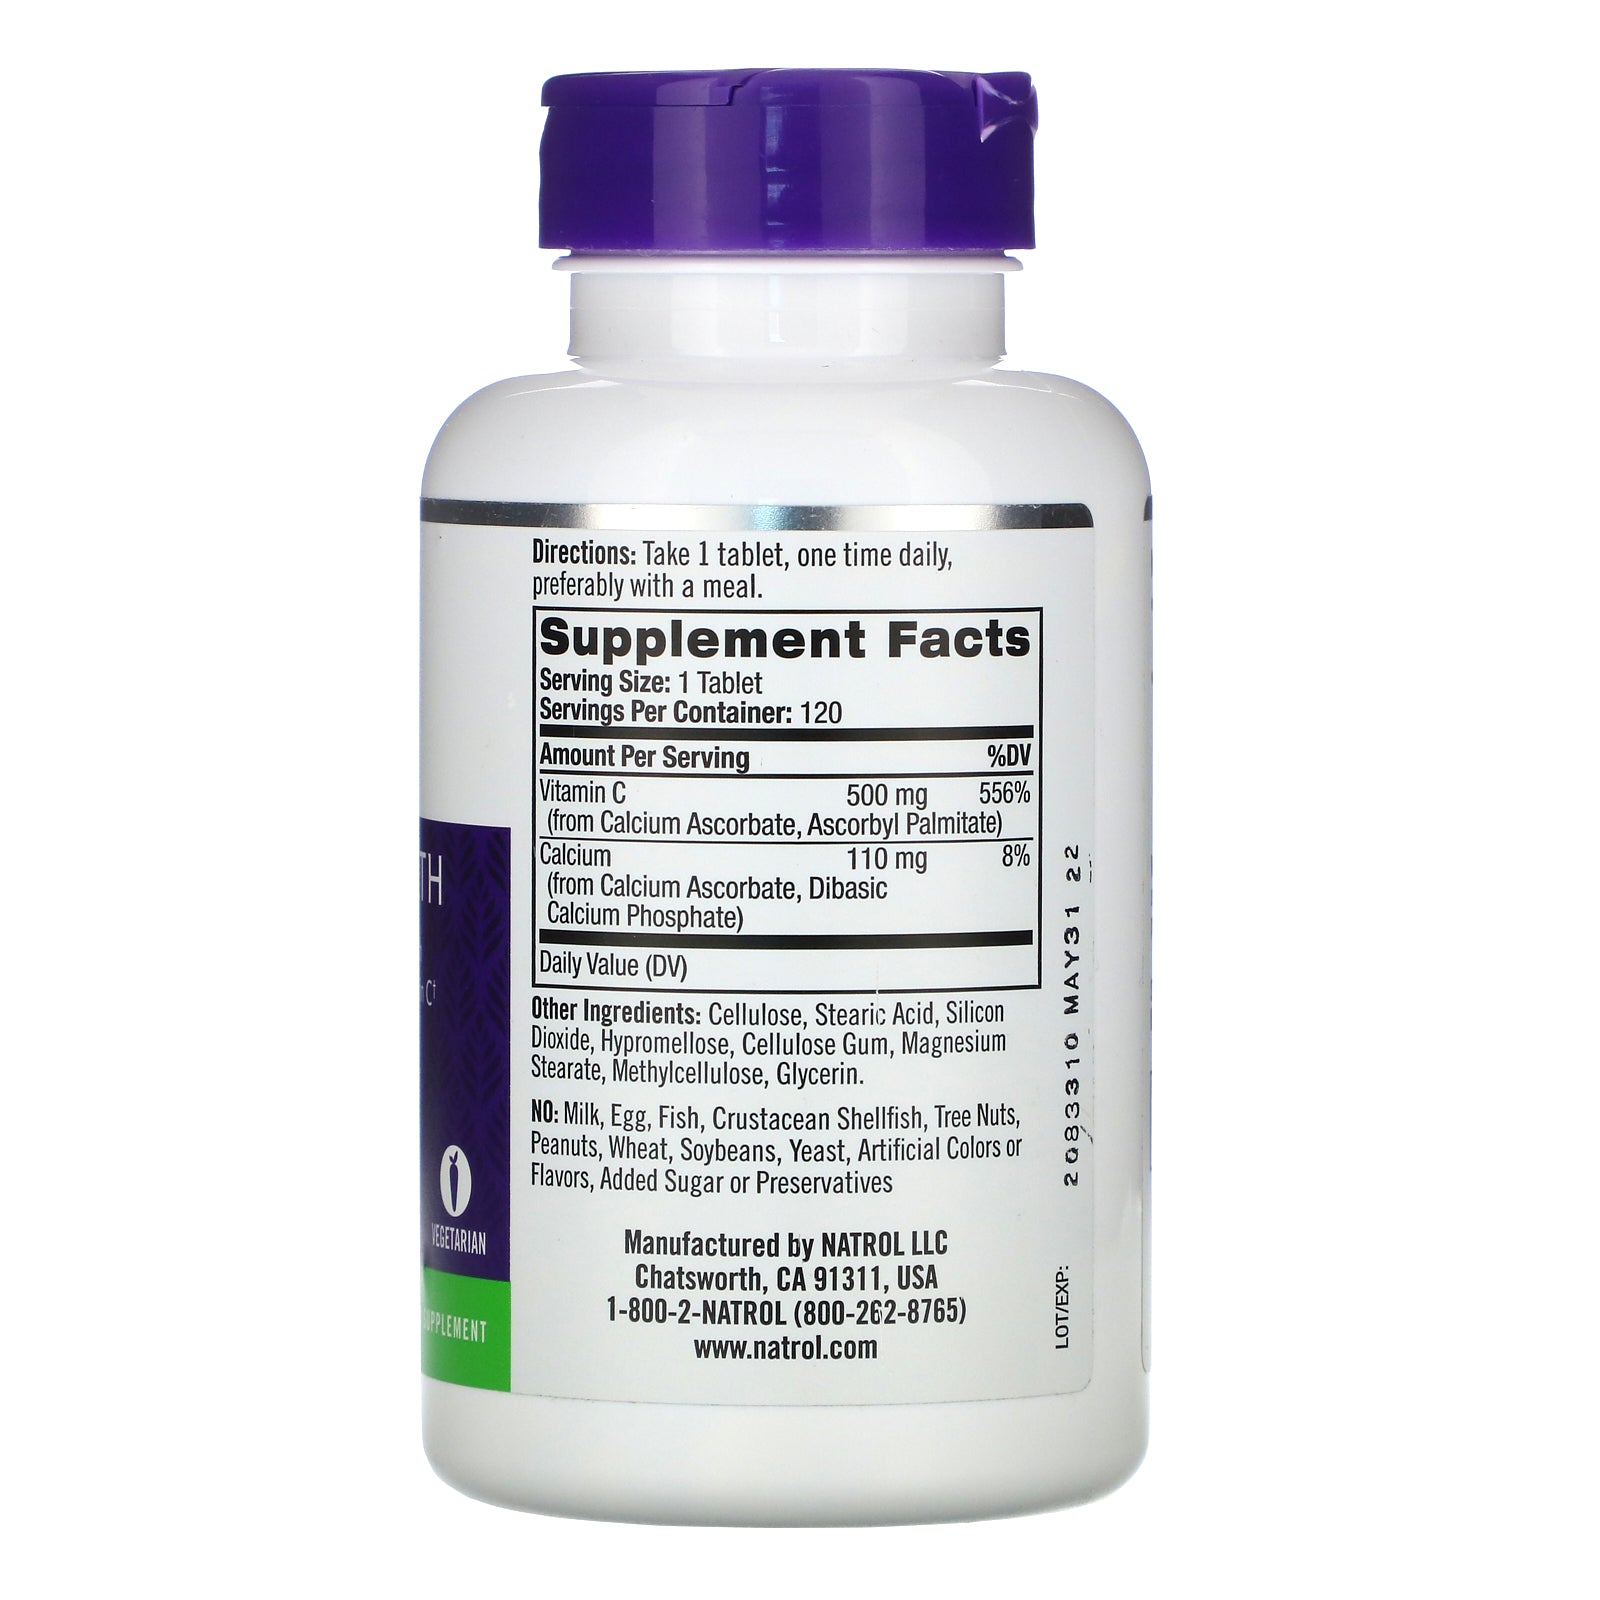 Natrol, Easy-C, 500 mg, 120 Tablets